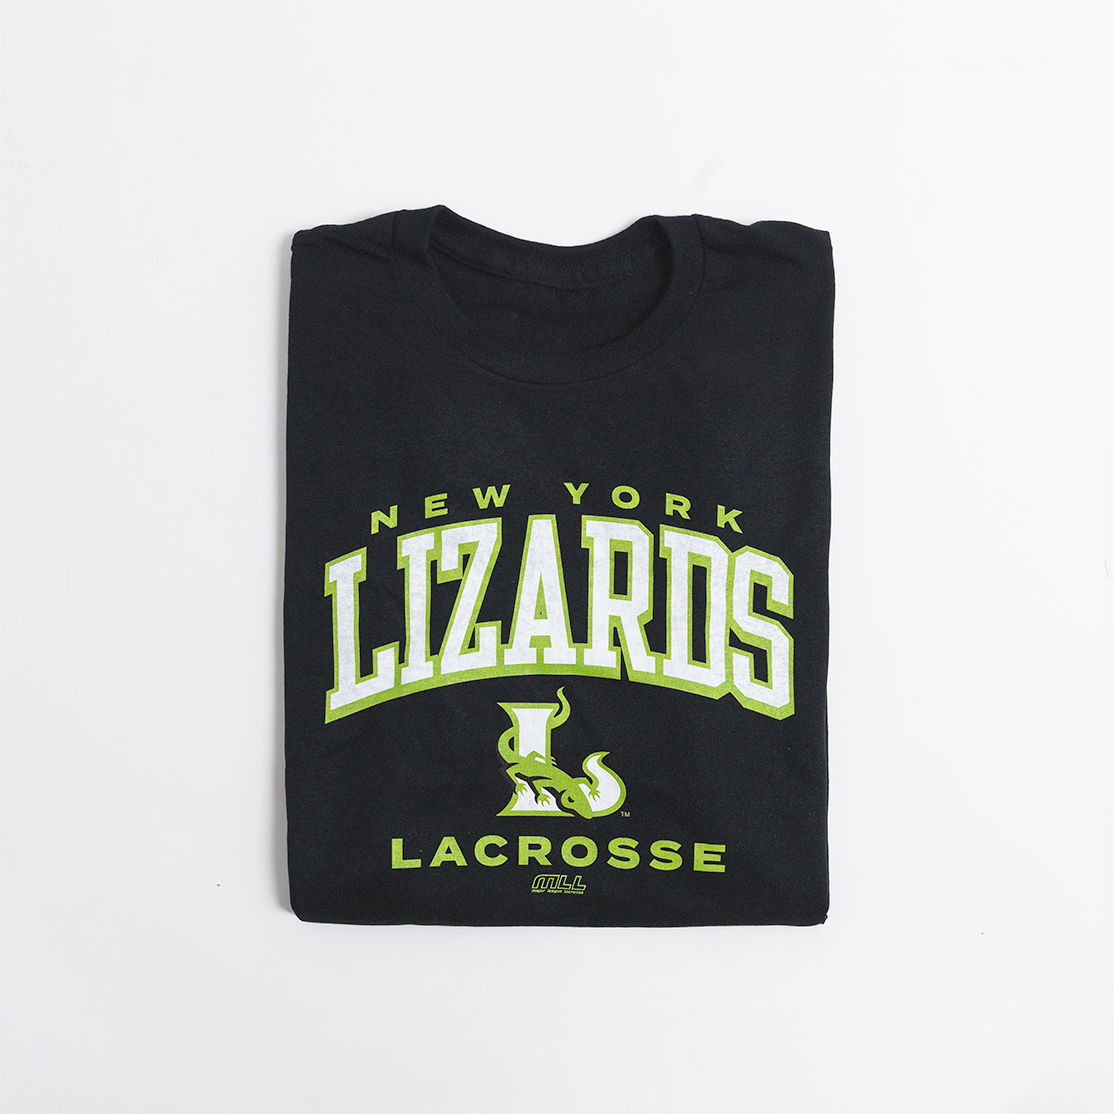 New York Lizards Lacrosse Tee